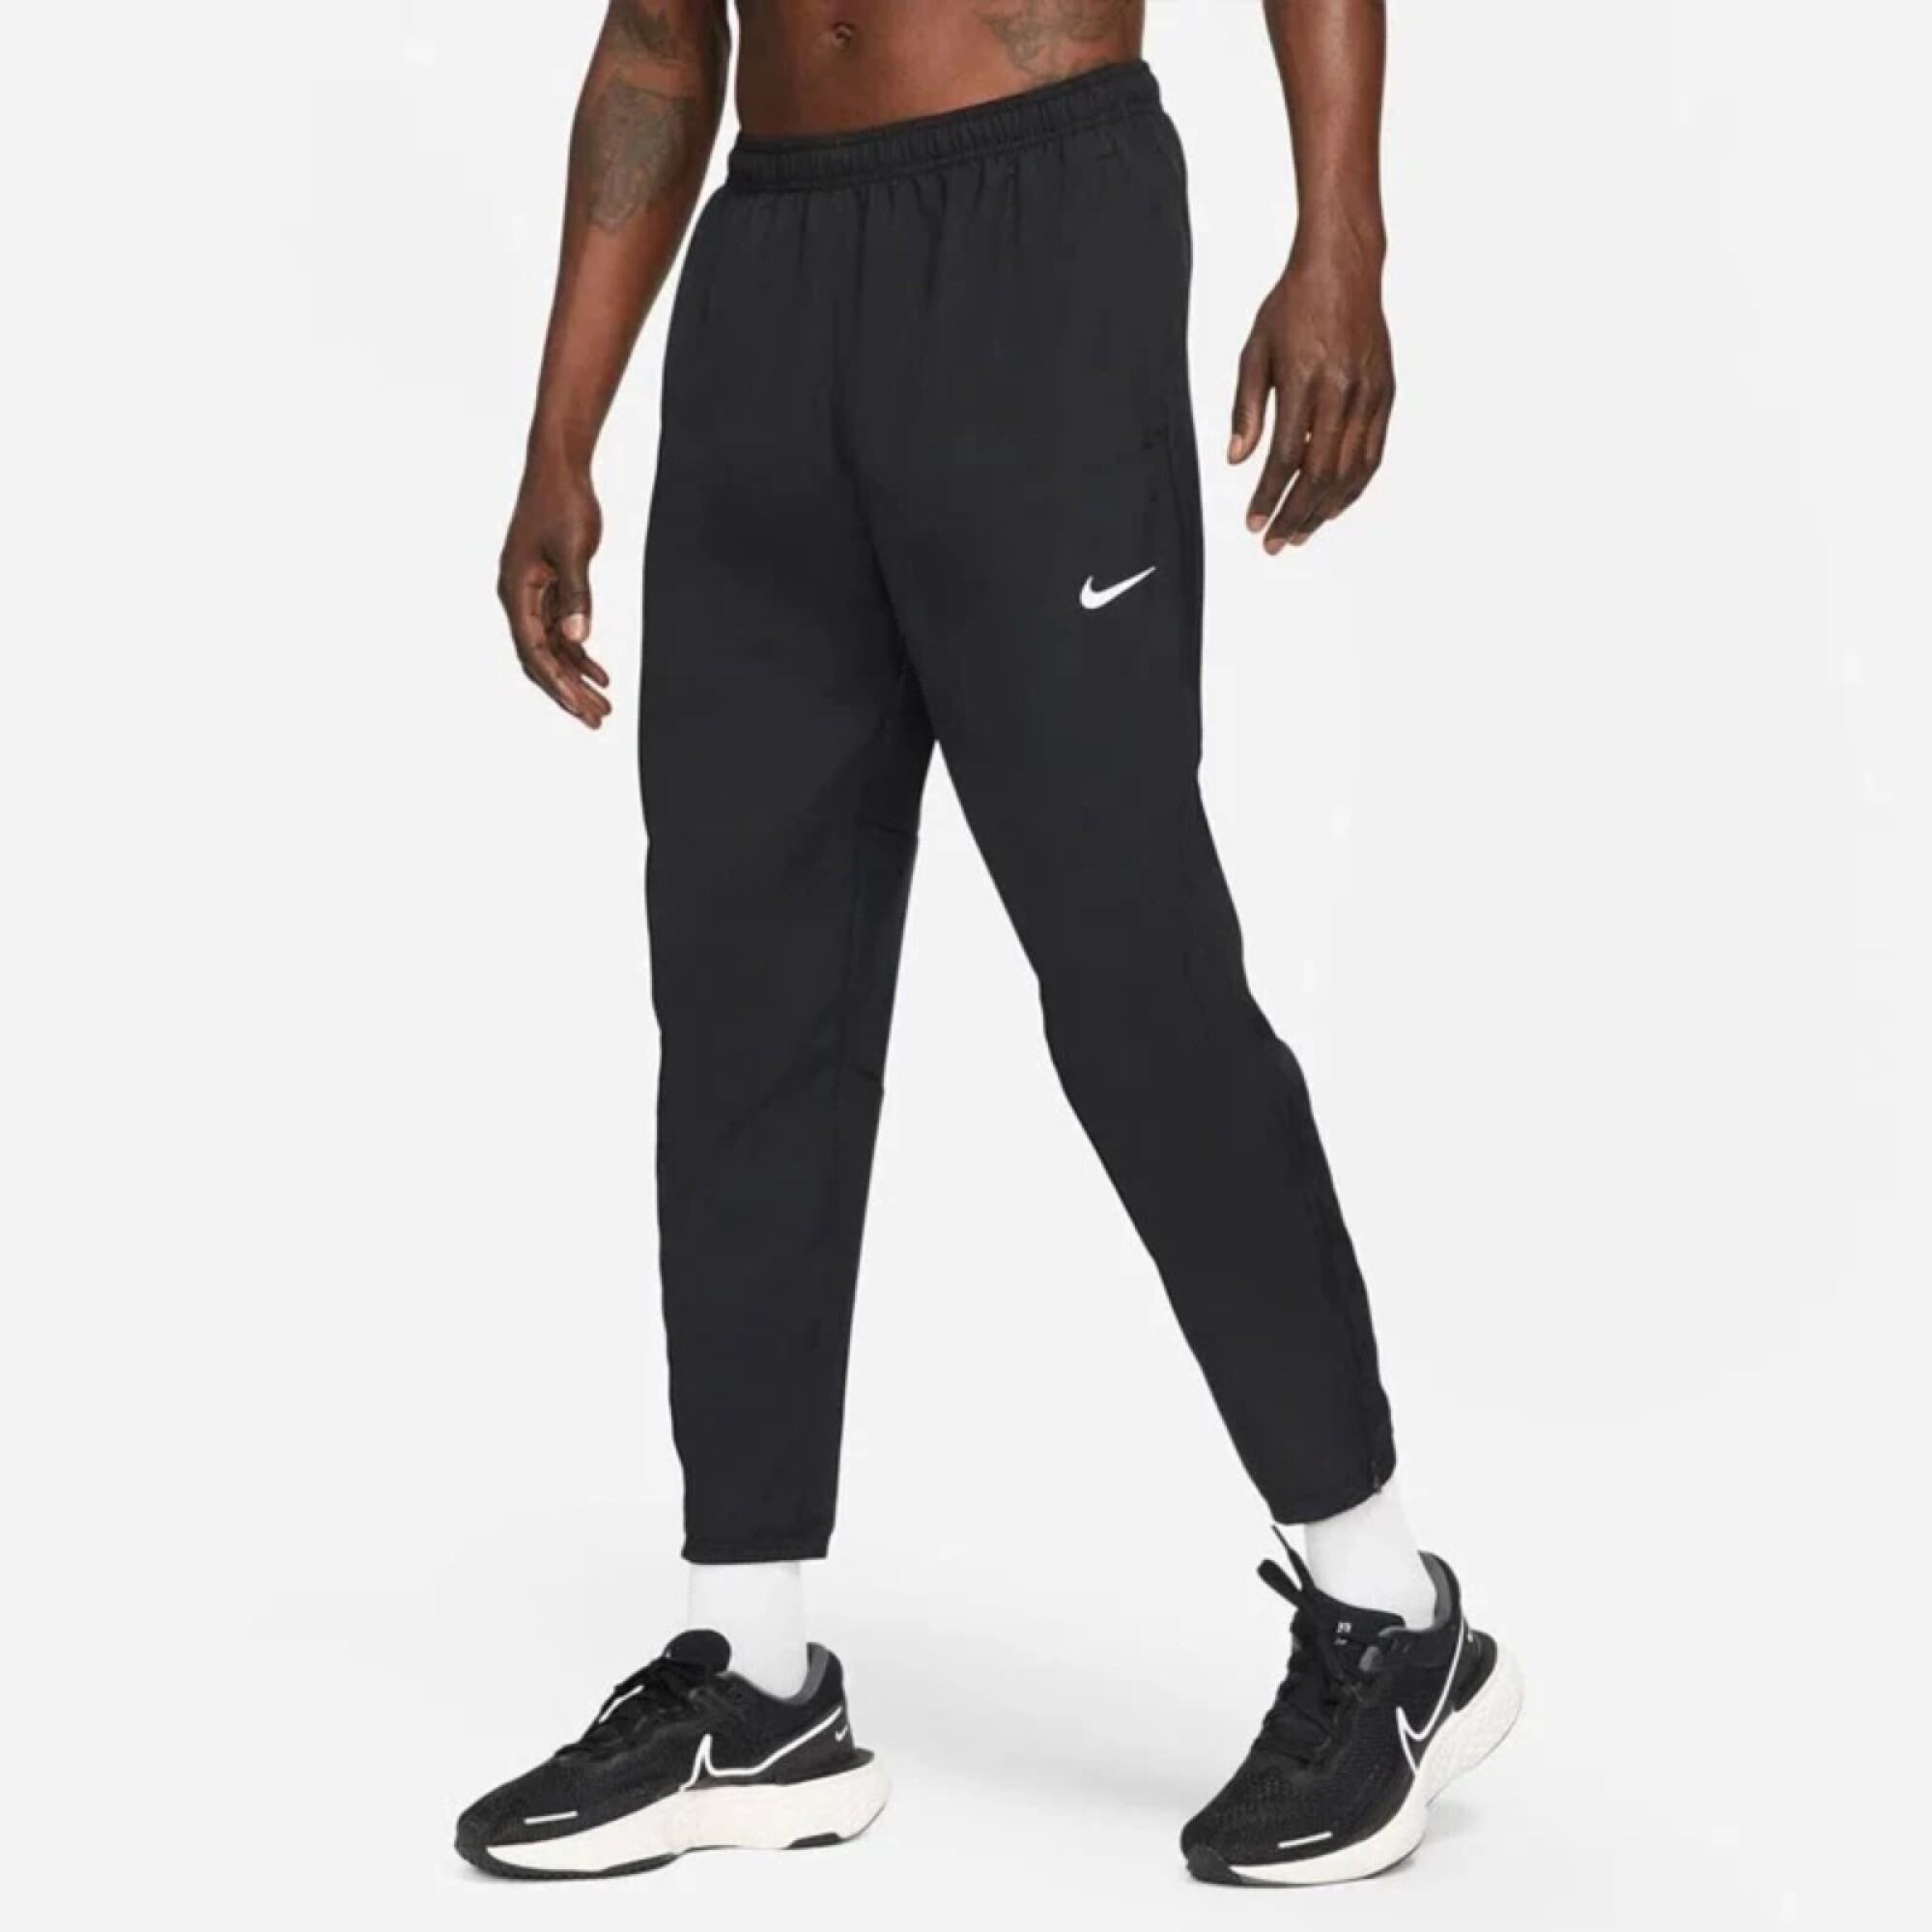 Insatisfactorio tramo Mentor Pantalon Nike Running Hombre Df Chllgr Black - S/C — Menpi